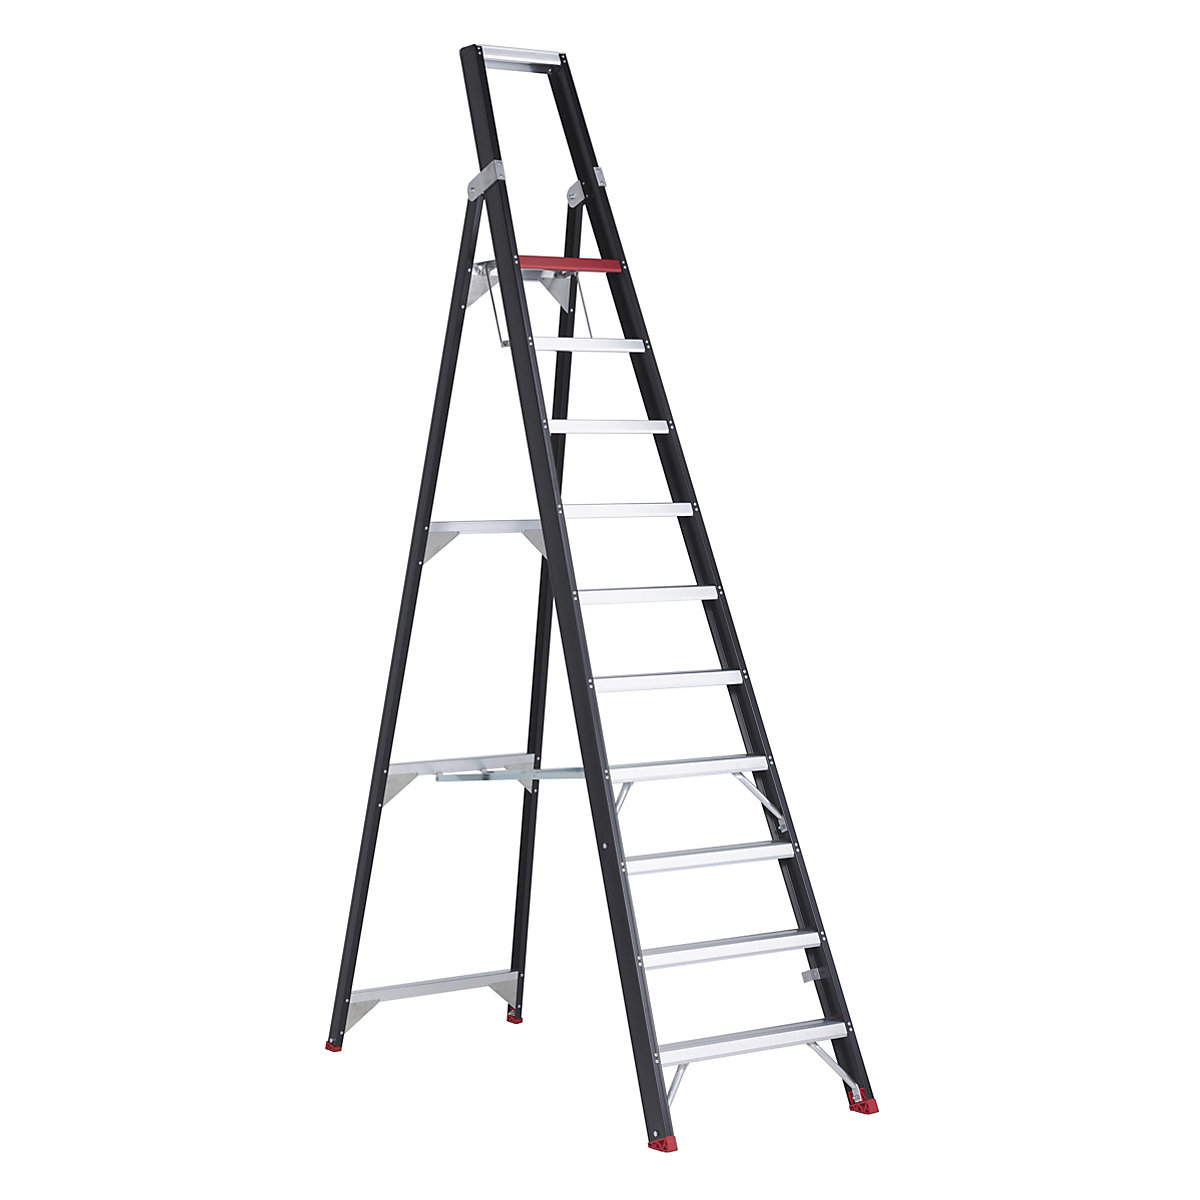 Safety step ladder – Altrex, single sided access, 10 steps incl. platform-10